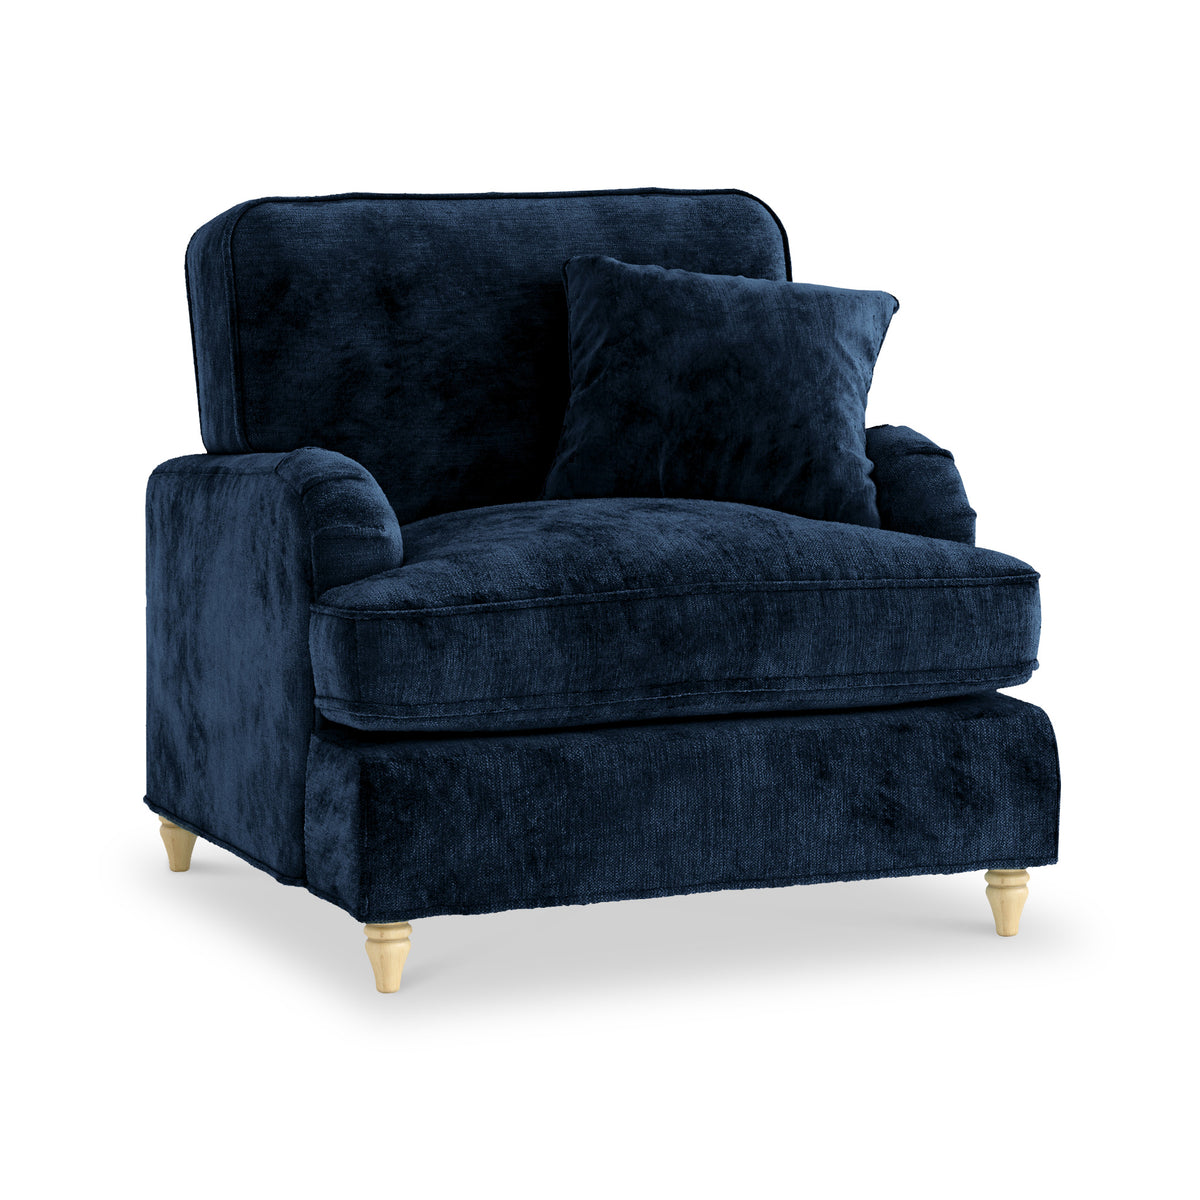 Arthur Navy Armchair from Roseland Furniture